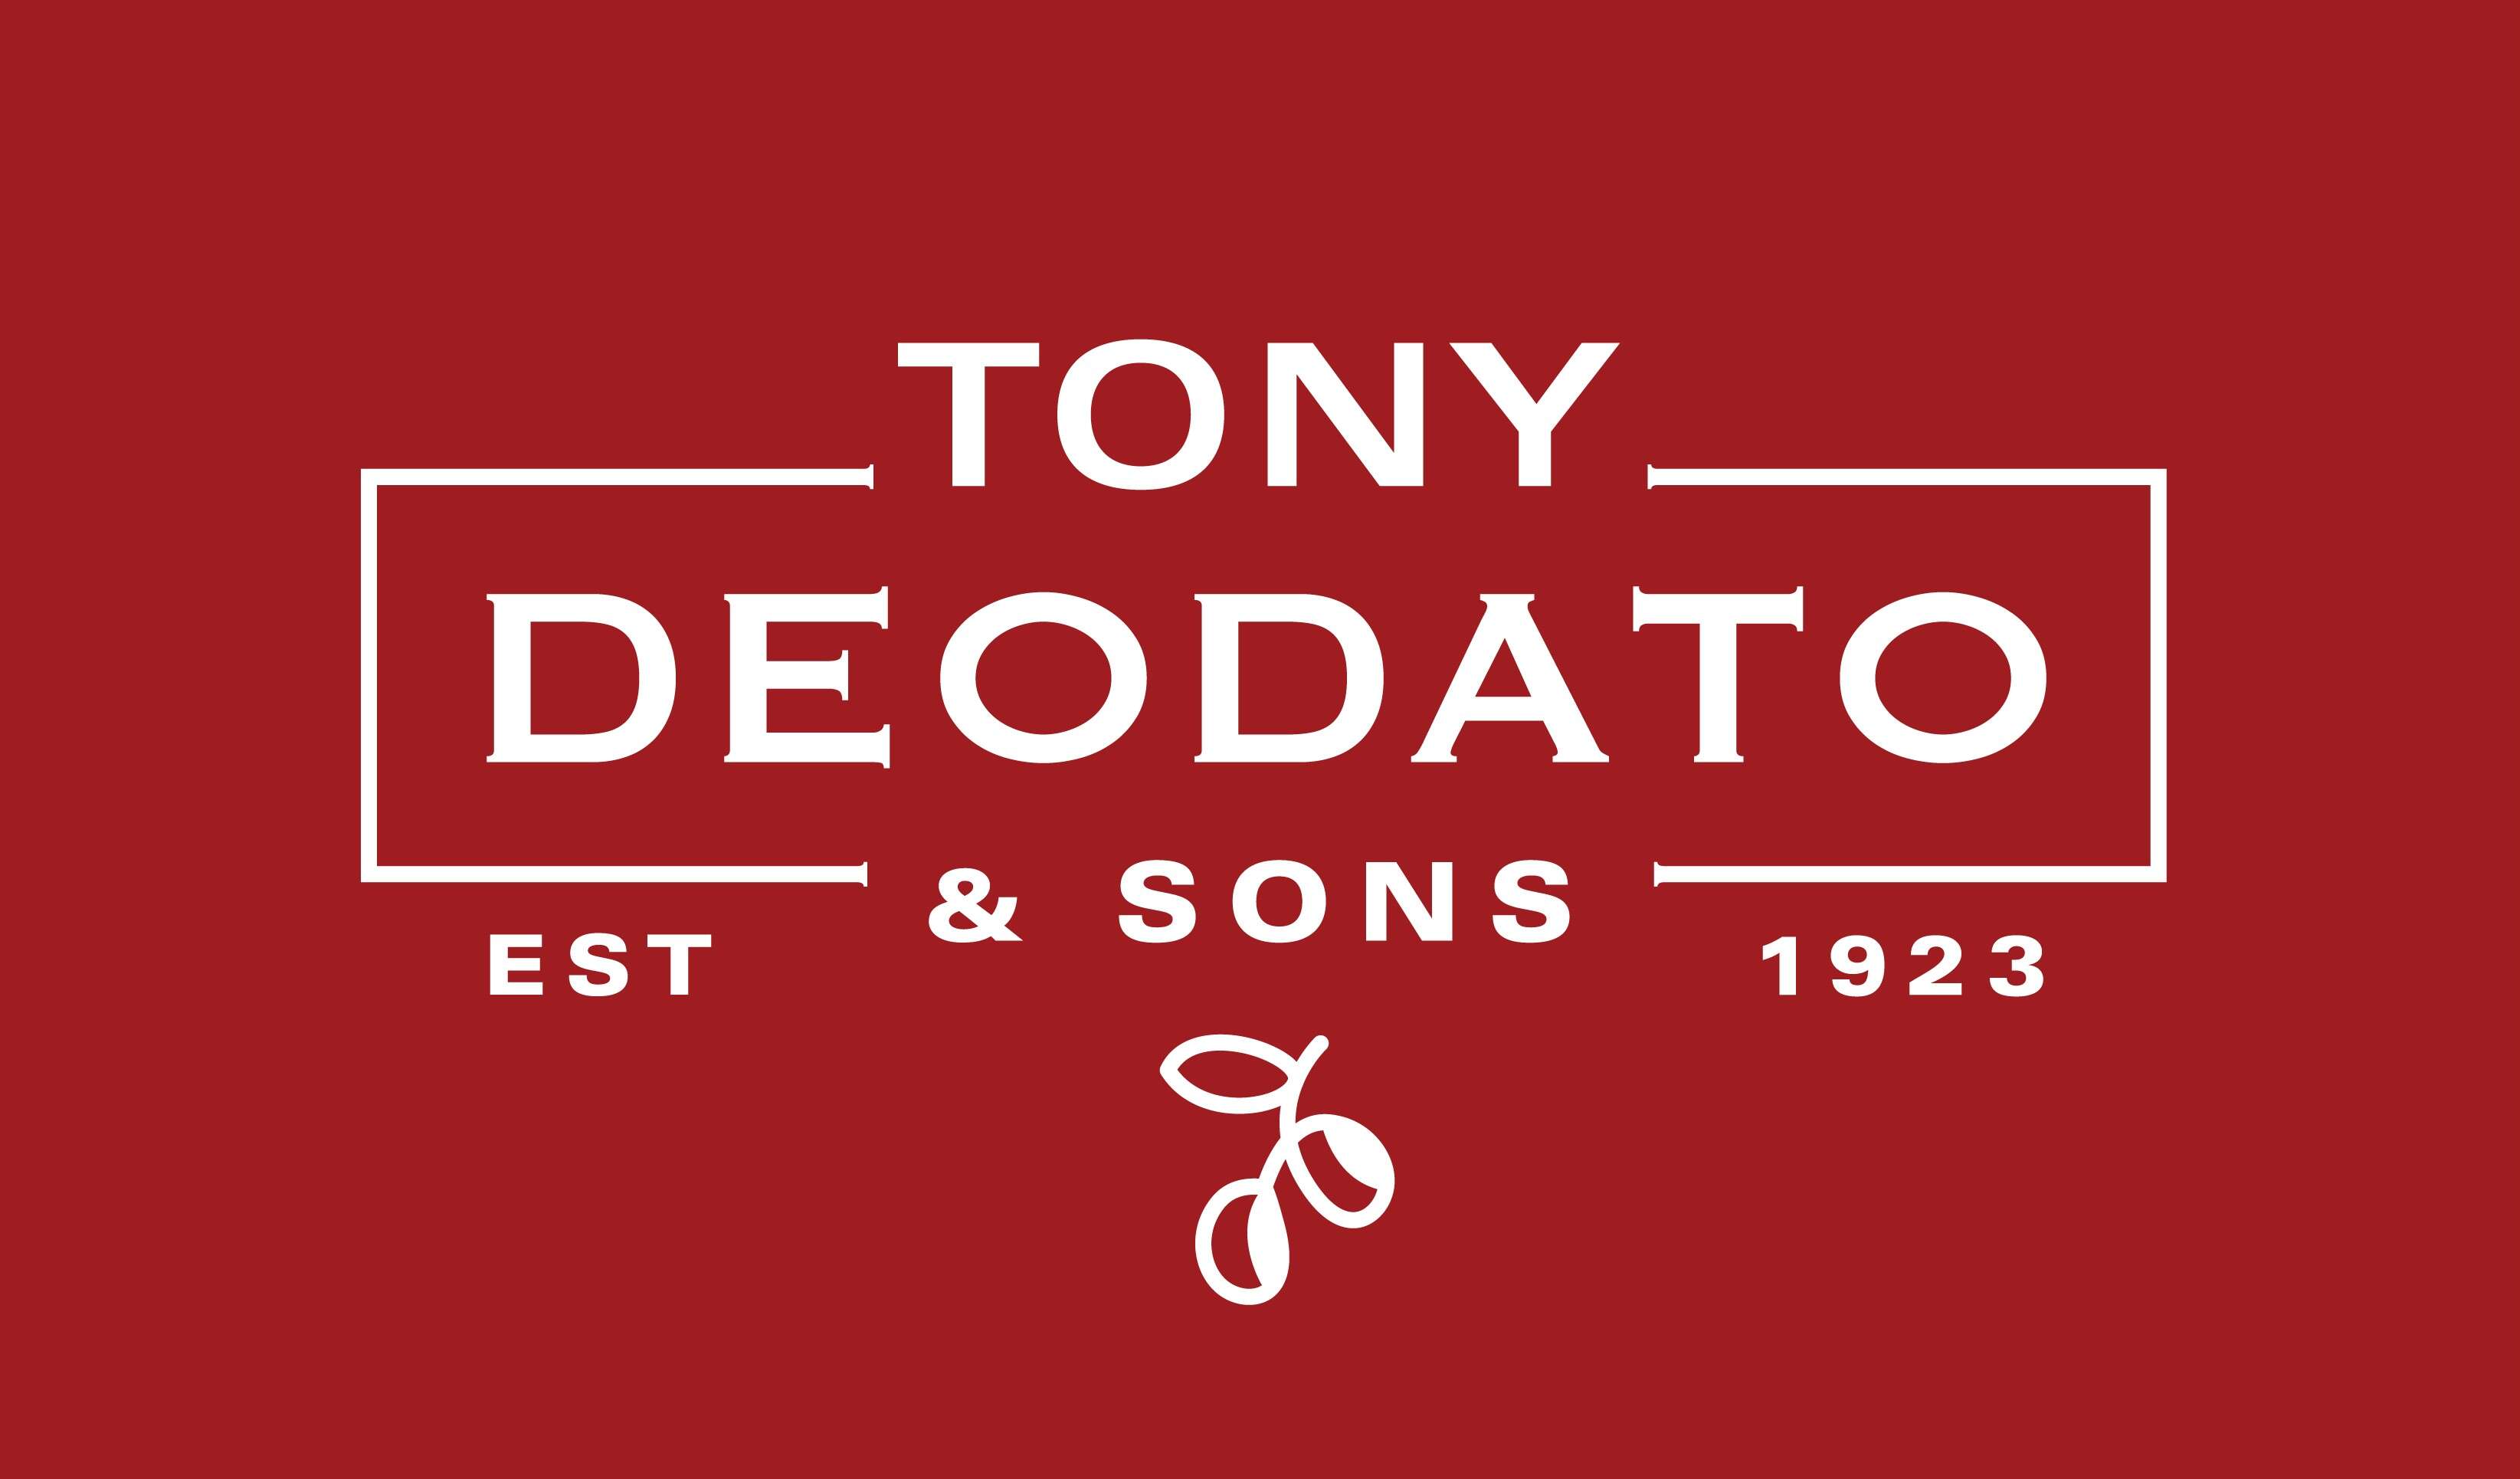 Tony Deodato & Sons